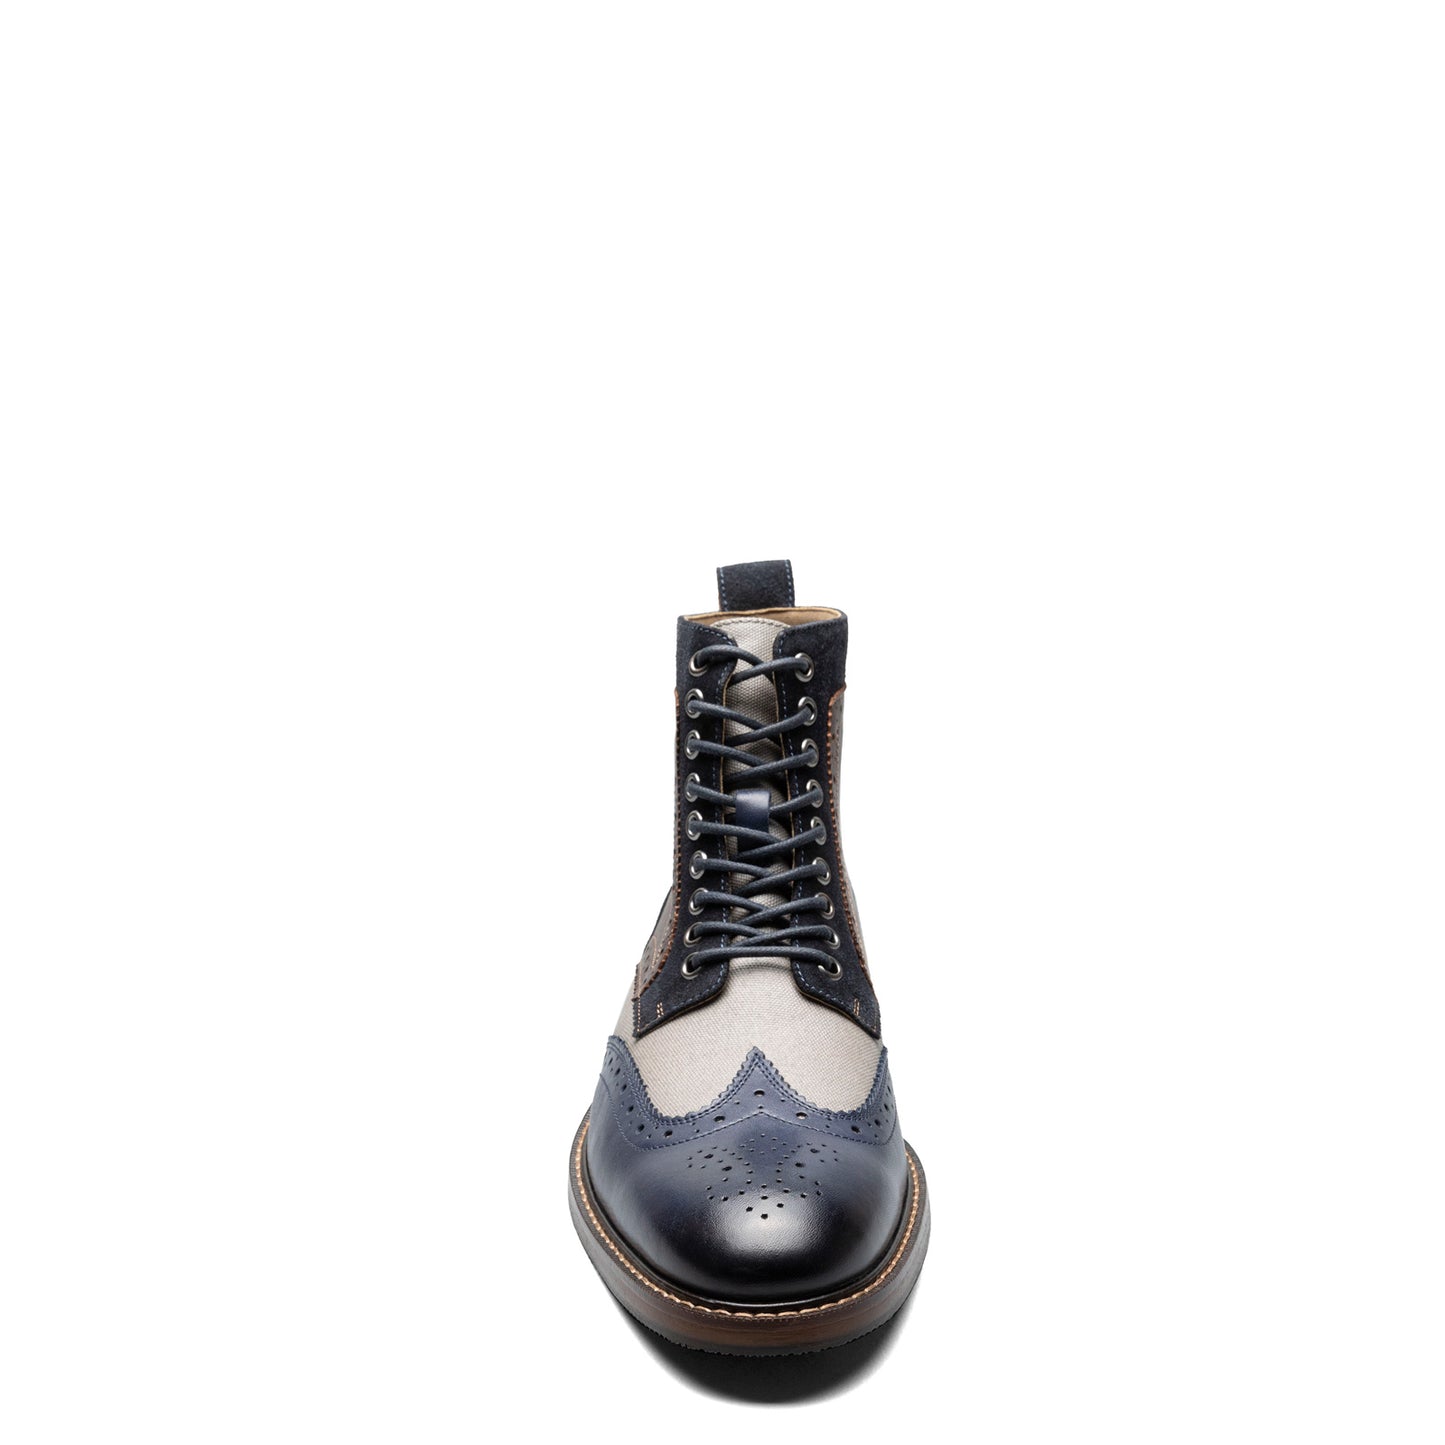 Peltz Shoes  Men's Stacy Adams Finnegan Wingtip Lace Up Boot Navy Multi 25427-492